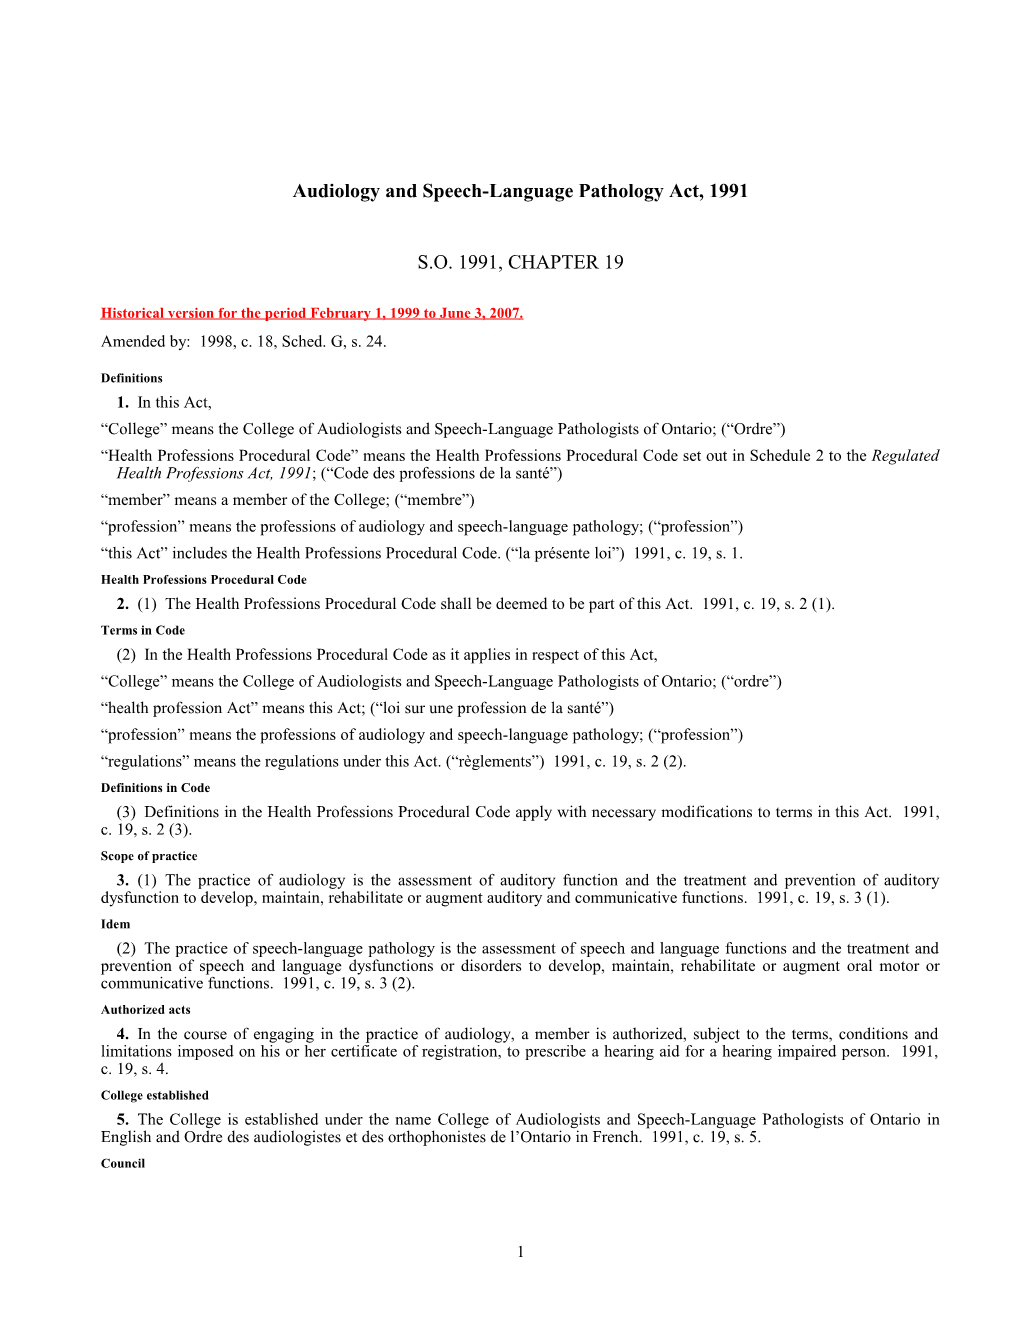 Audiology and Speech-Language Pathology Act, 1991, S.O. 1991, C. 19